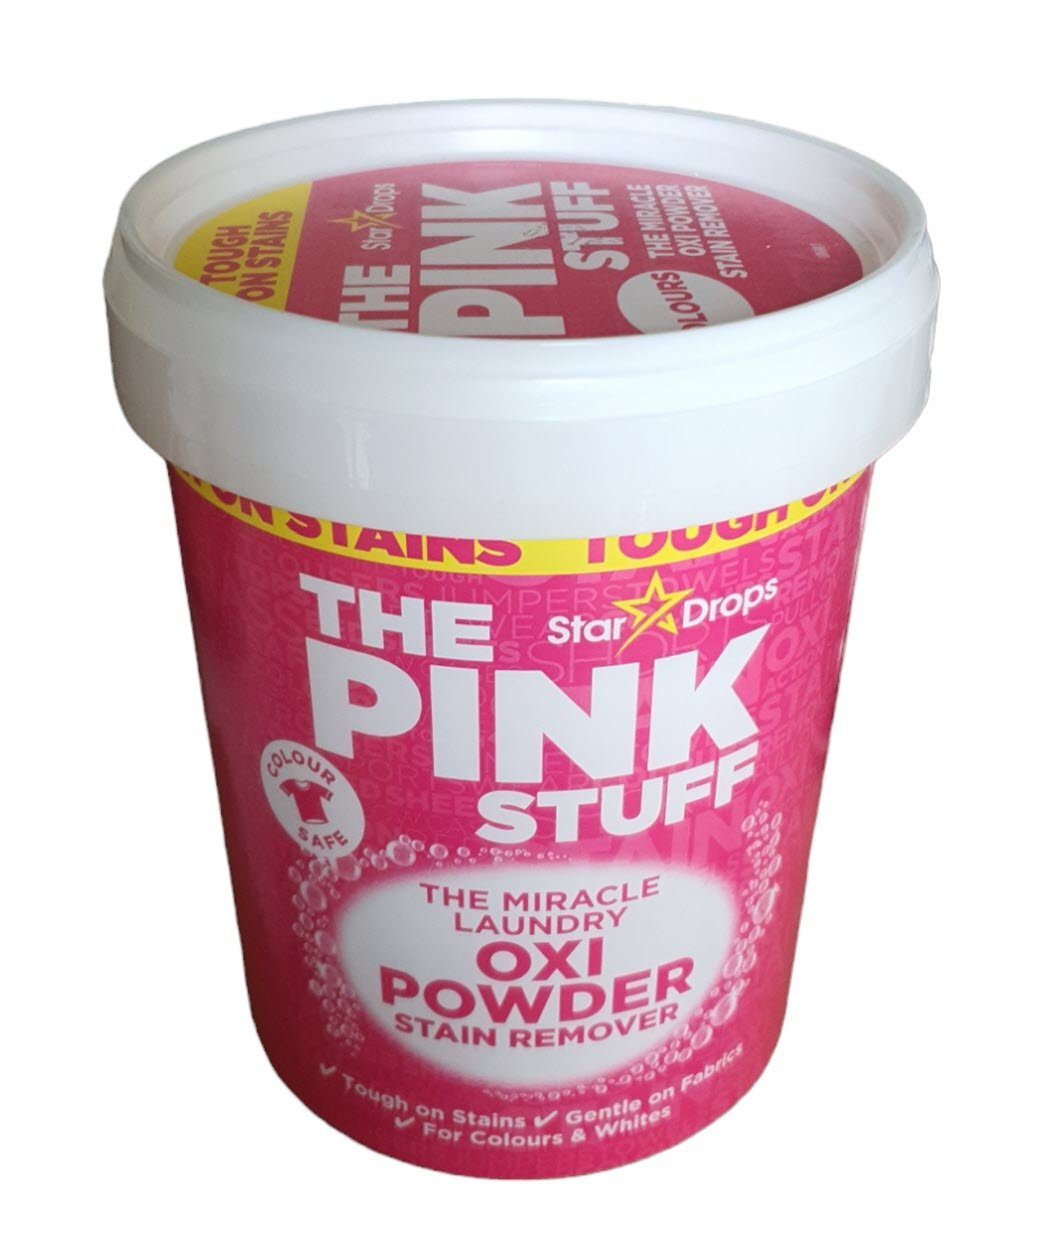 1 Stuff The Pink Pink Fleckentferner Powder weiss Stuff kg Fleckenentferner Oxi The